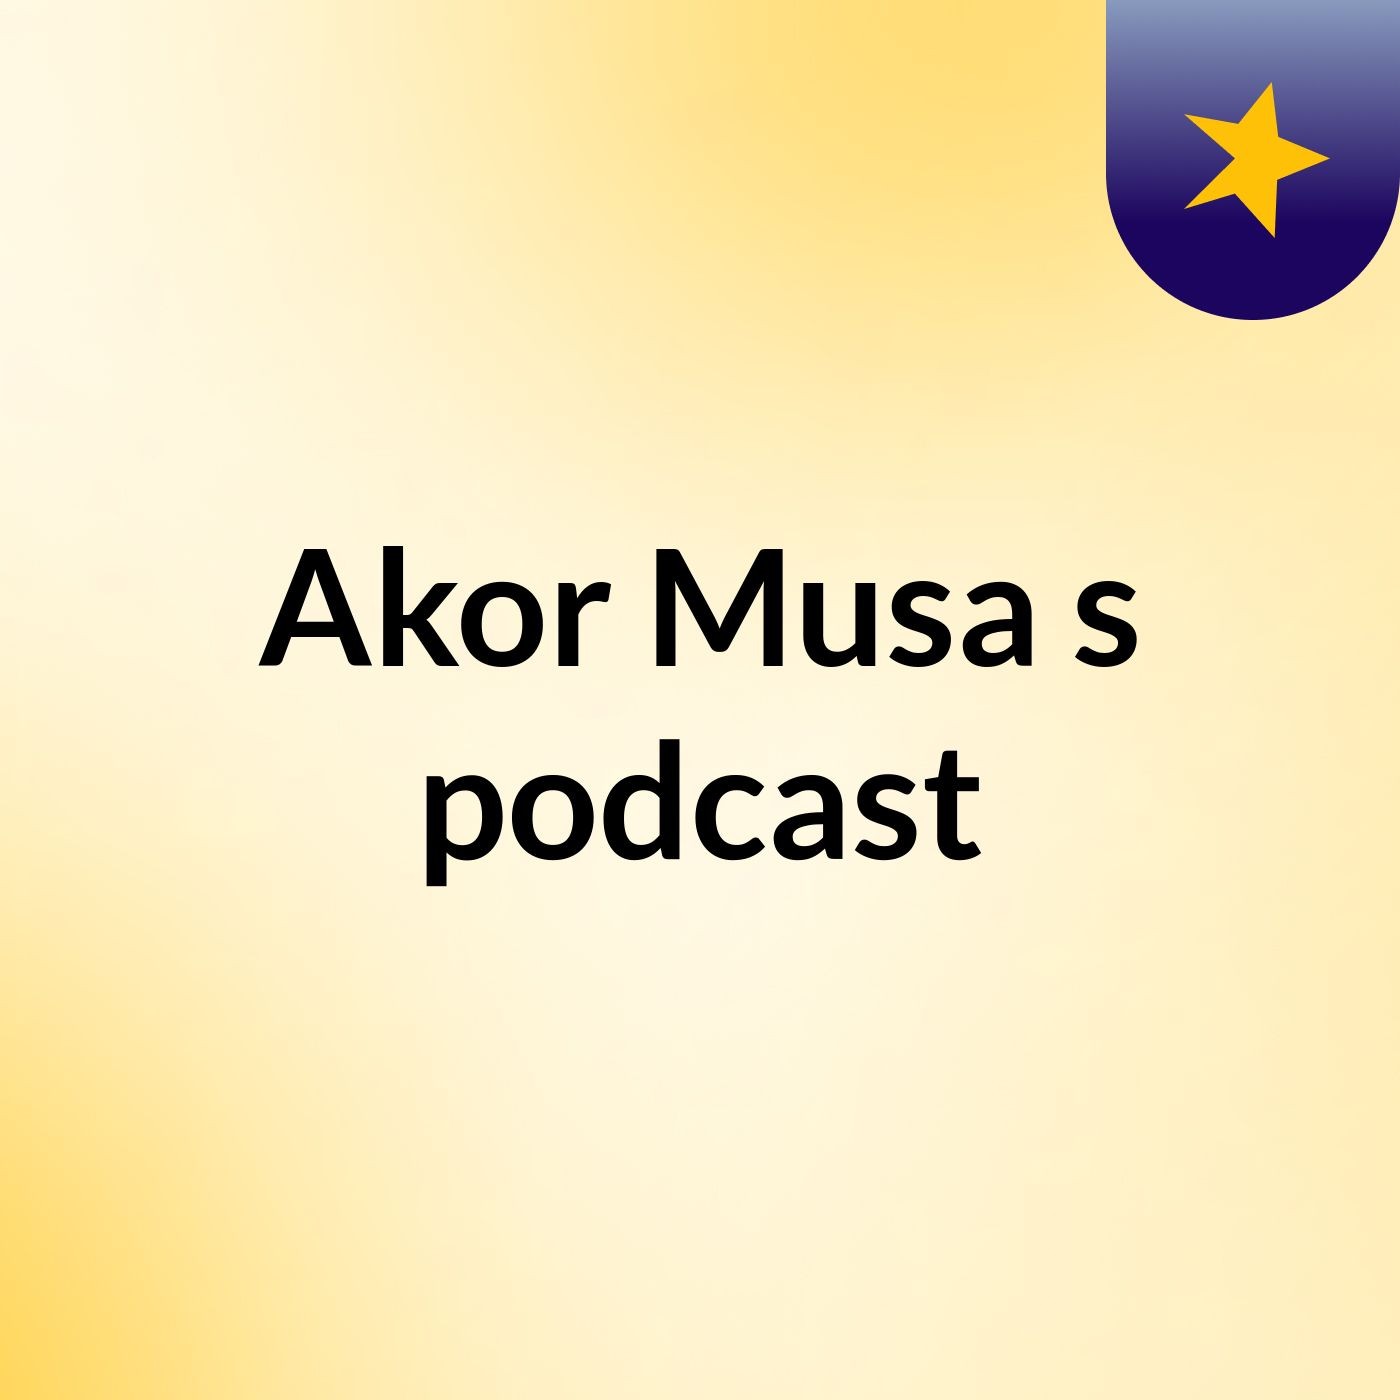 Akor Musa's podcast